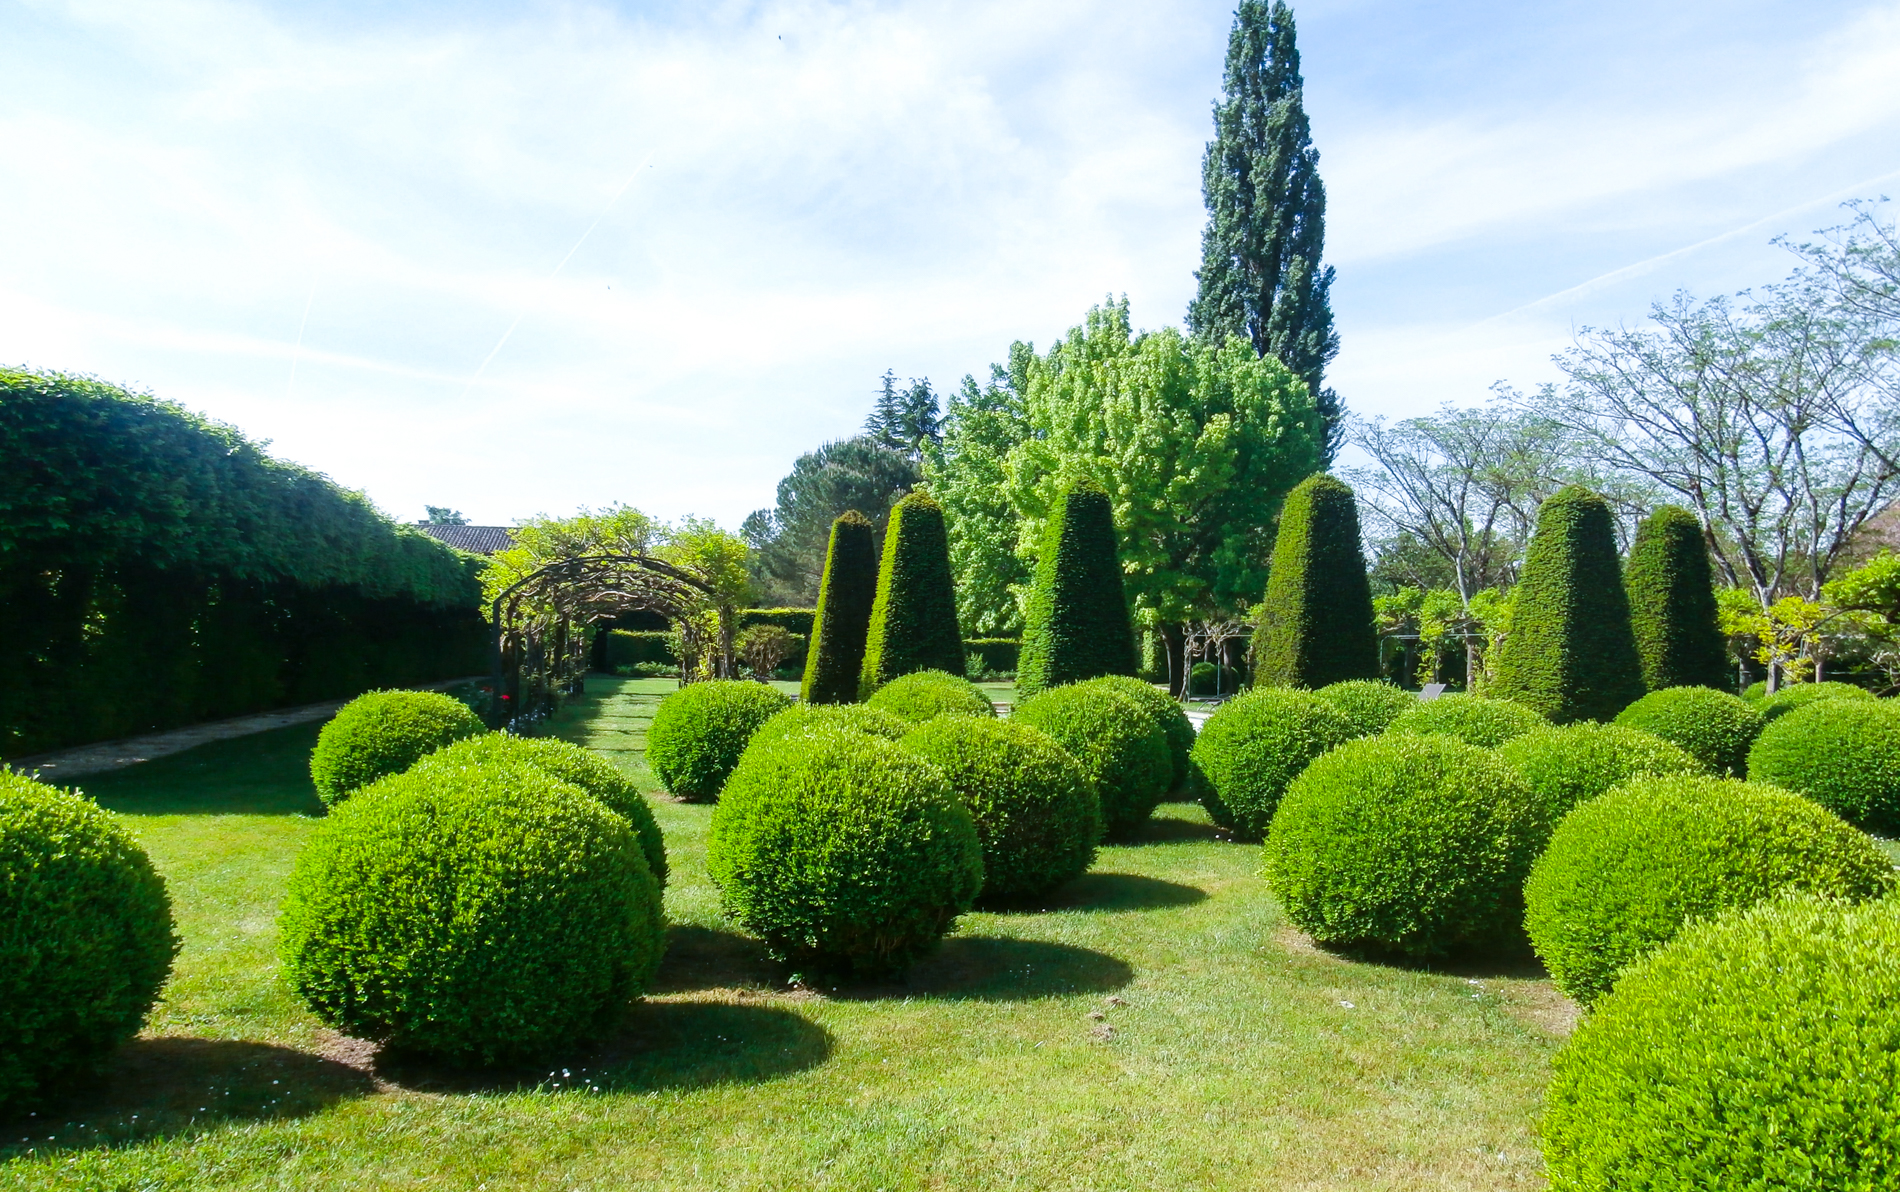 The gardens at Le Vieux Logis